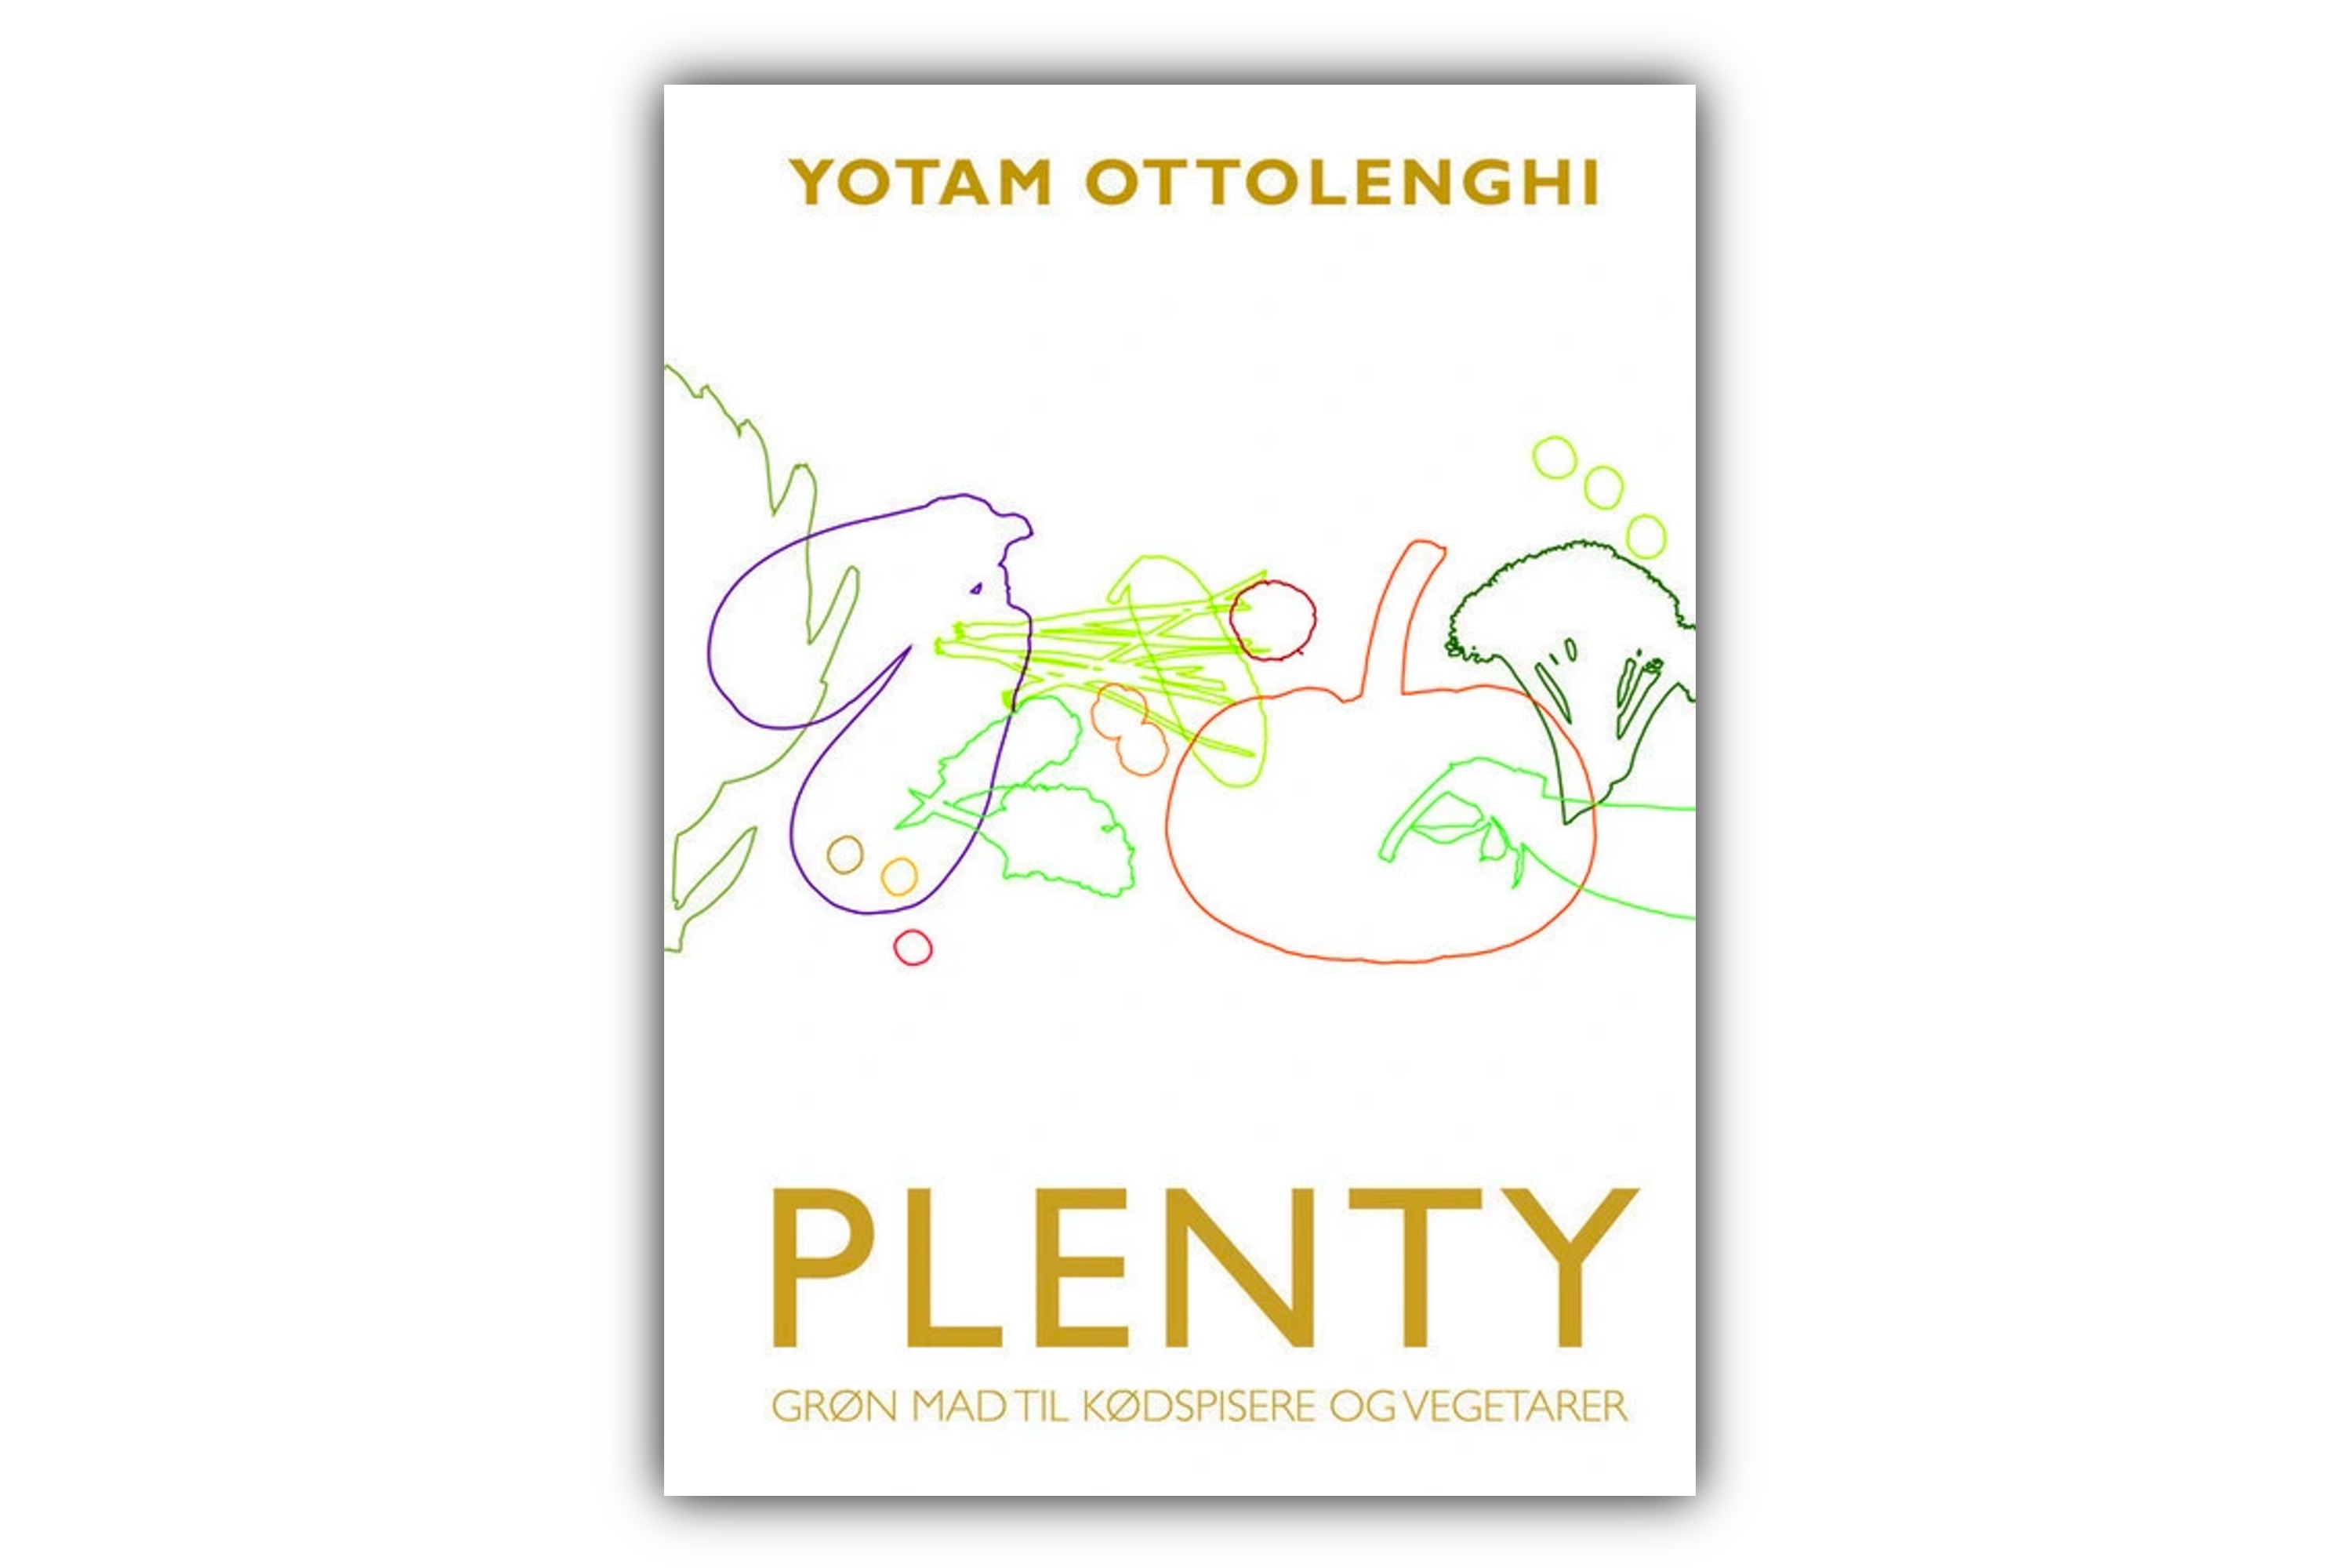 Plenty (dansk) / Yotam Ottolenghi